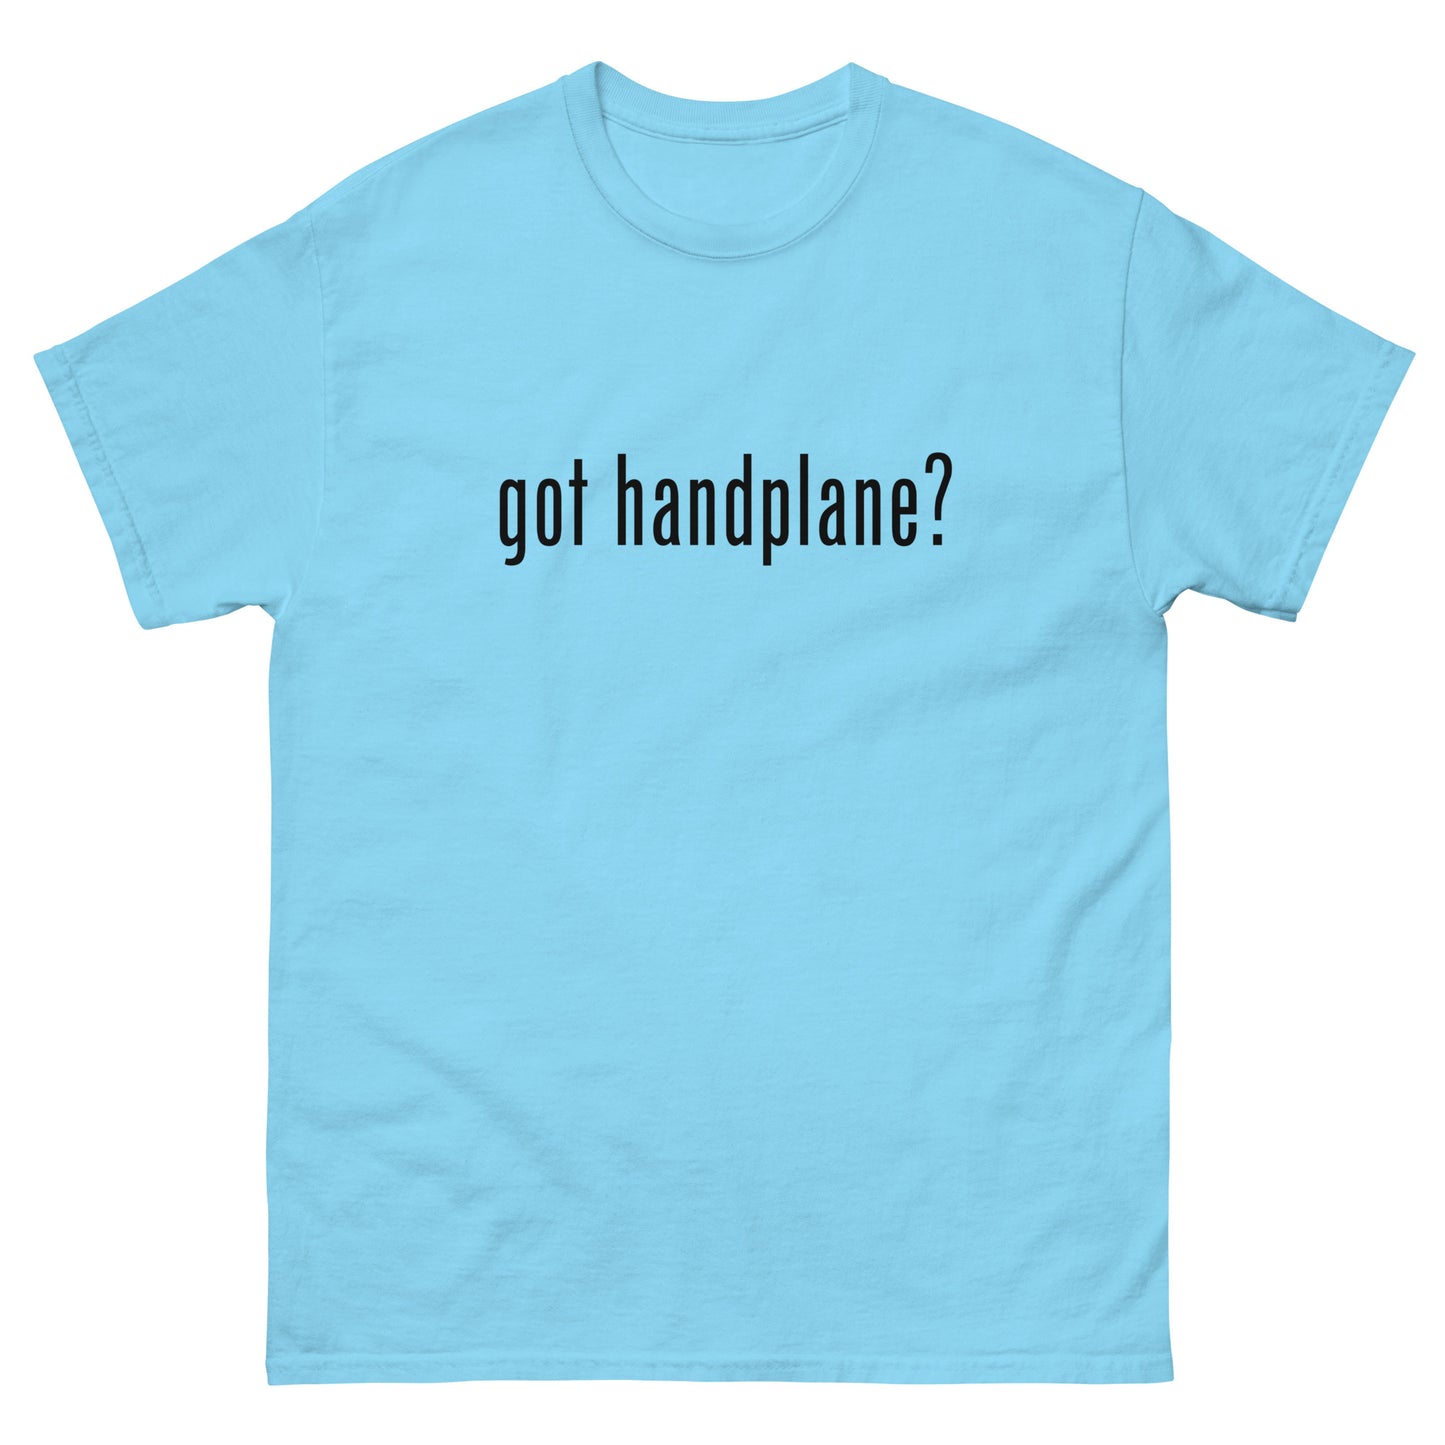 “got handplane?” Woodworking T Shirt – Black Ink (Multiple Colors)